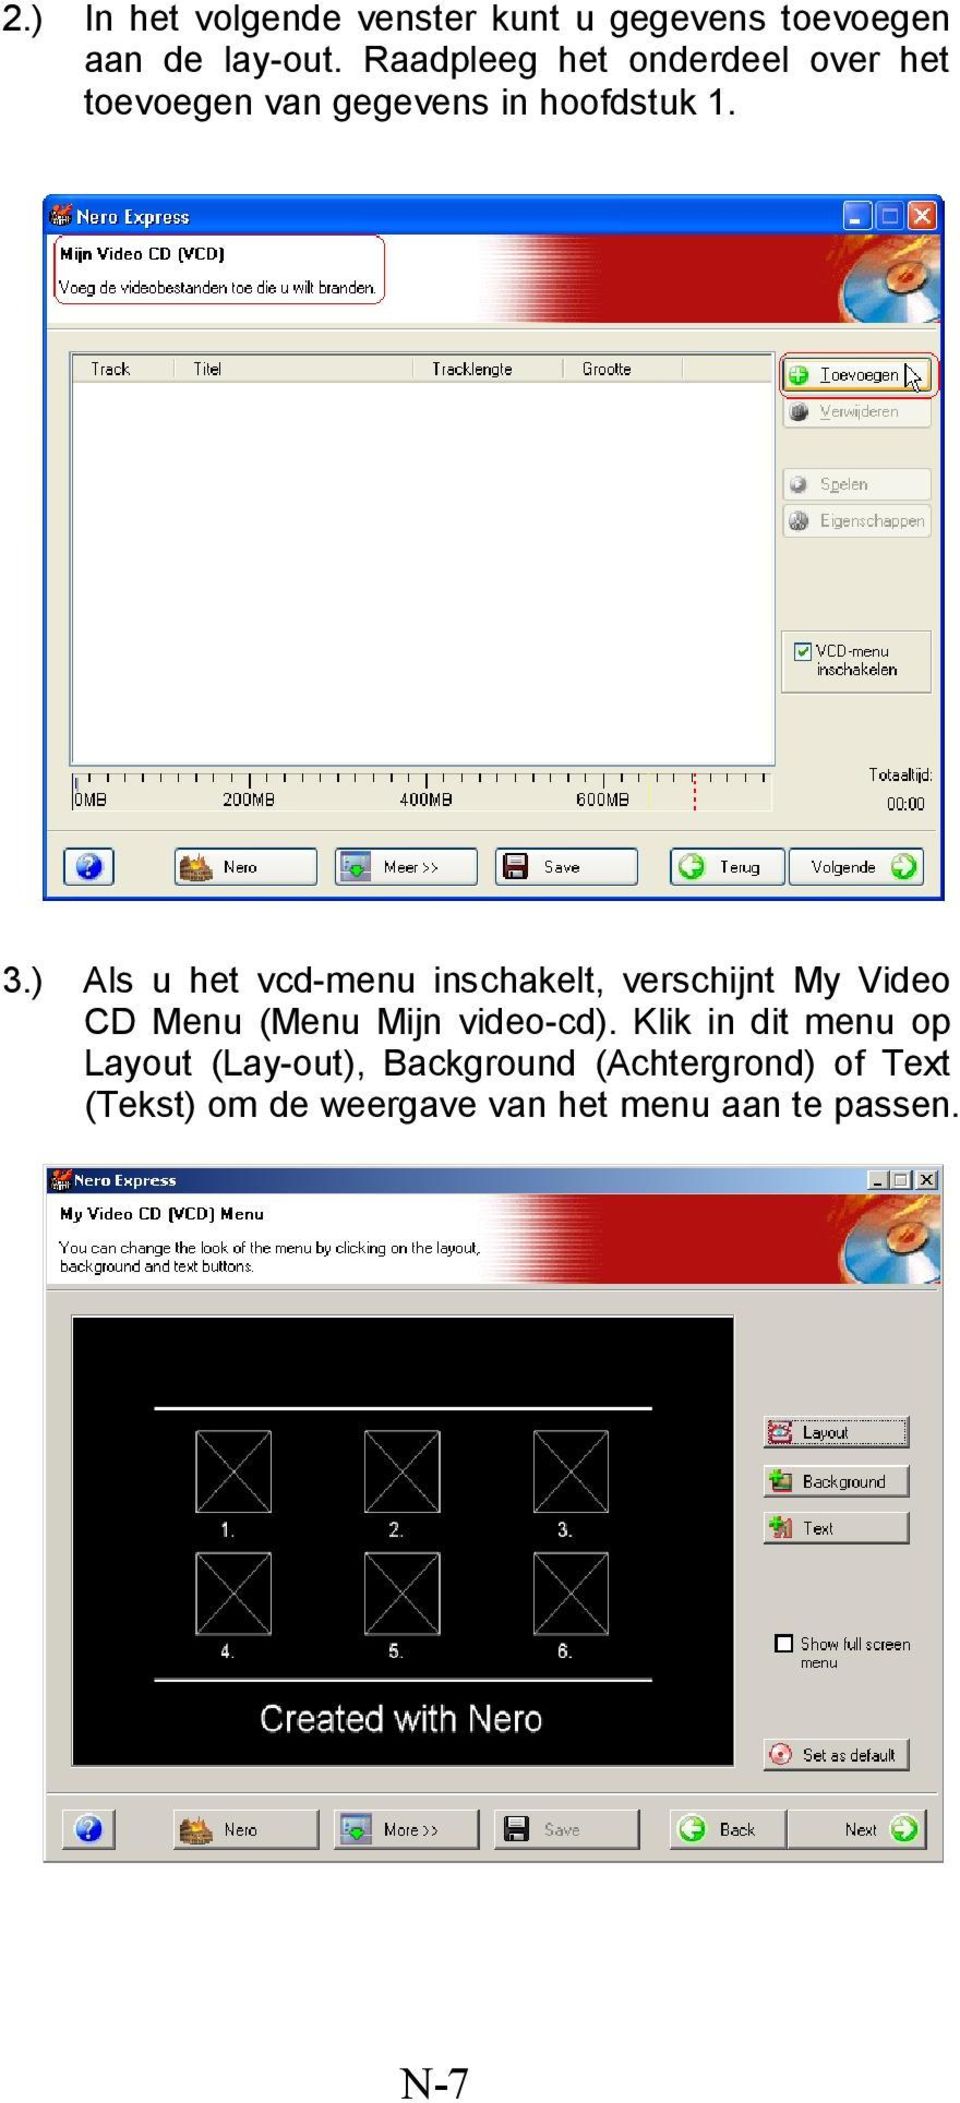 ) Als u het vcd-menu inschakelt, verschijnt My Video CD Menu (Menu Mijn video-cd).